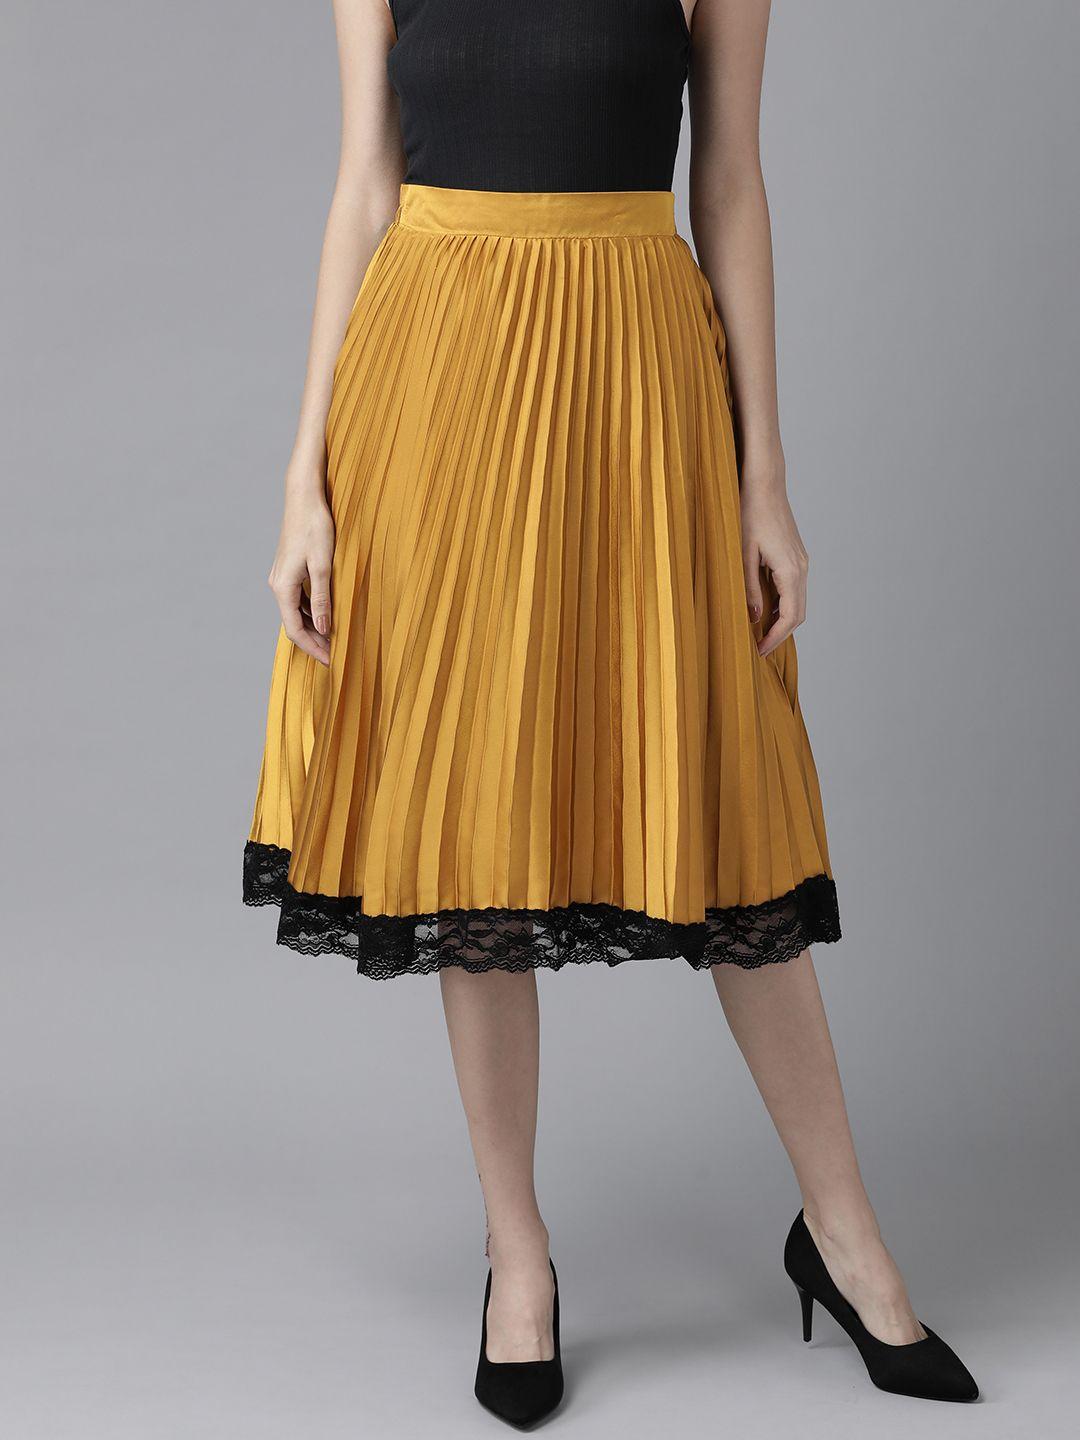 kassually women mustard yellow satin lace insert accordion pleated skirt